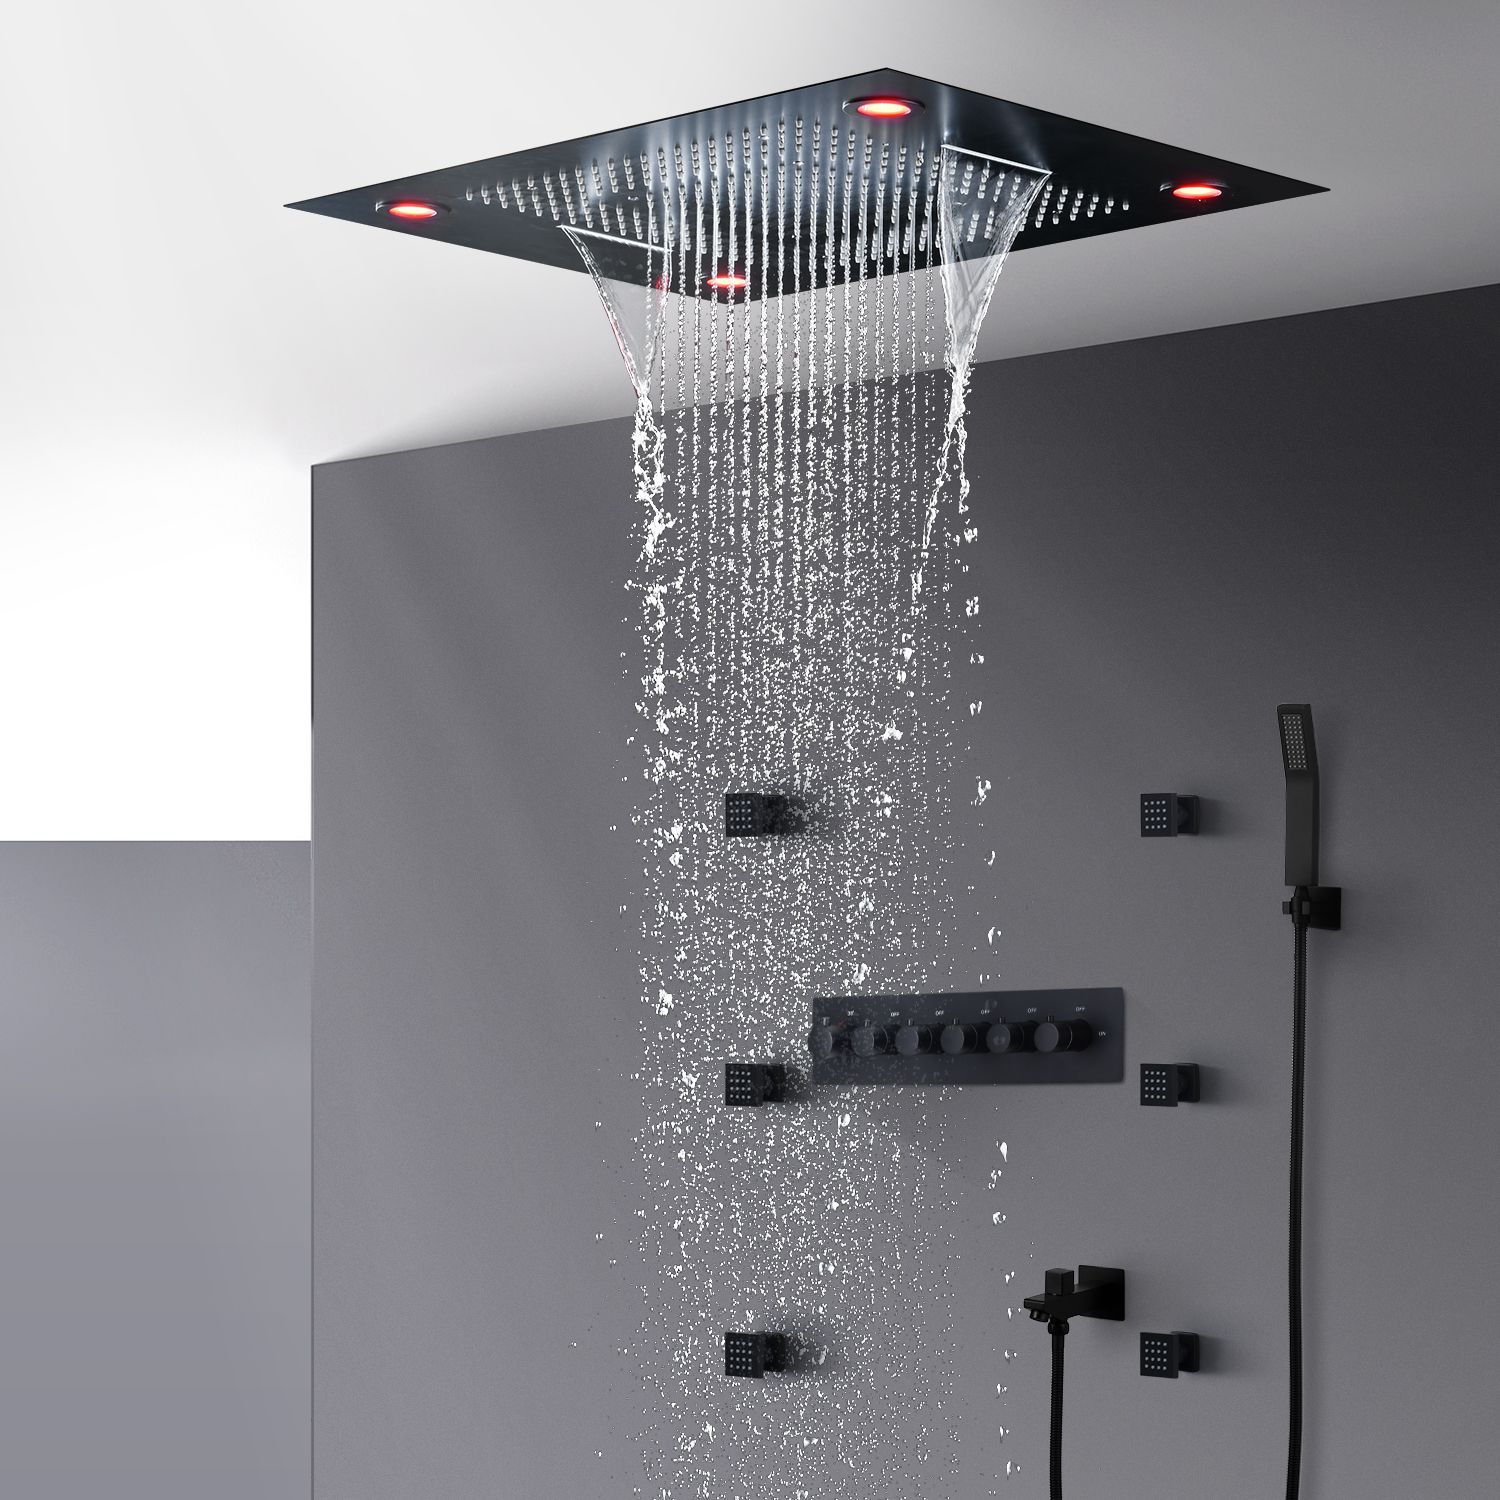 2019 Black Shower Set 2019 Modern Hotel Concealed Ceiling Shower Dual Rain Top Showerhead Waterfall Body Jets 2 Inch Massage Bath From Jmhm 1668 35